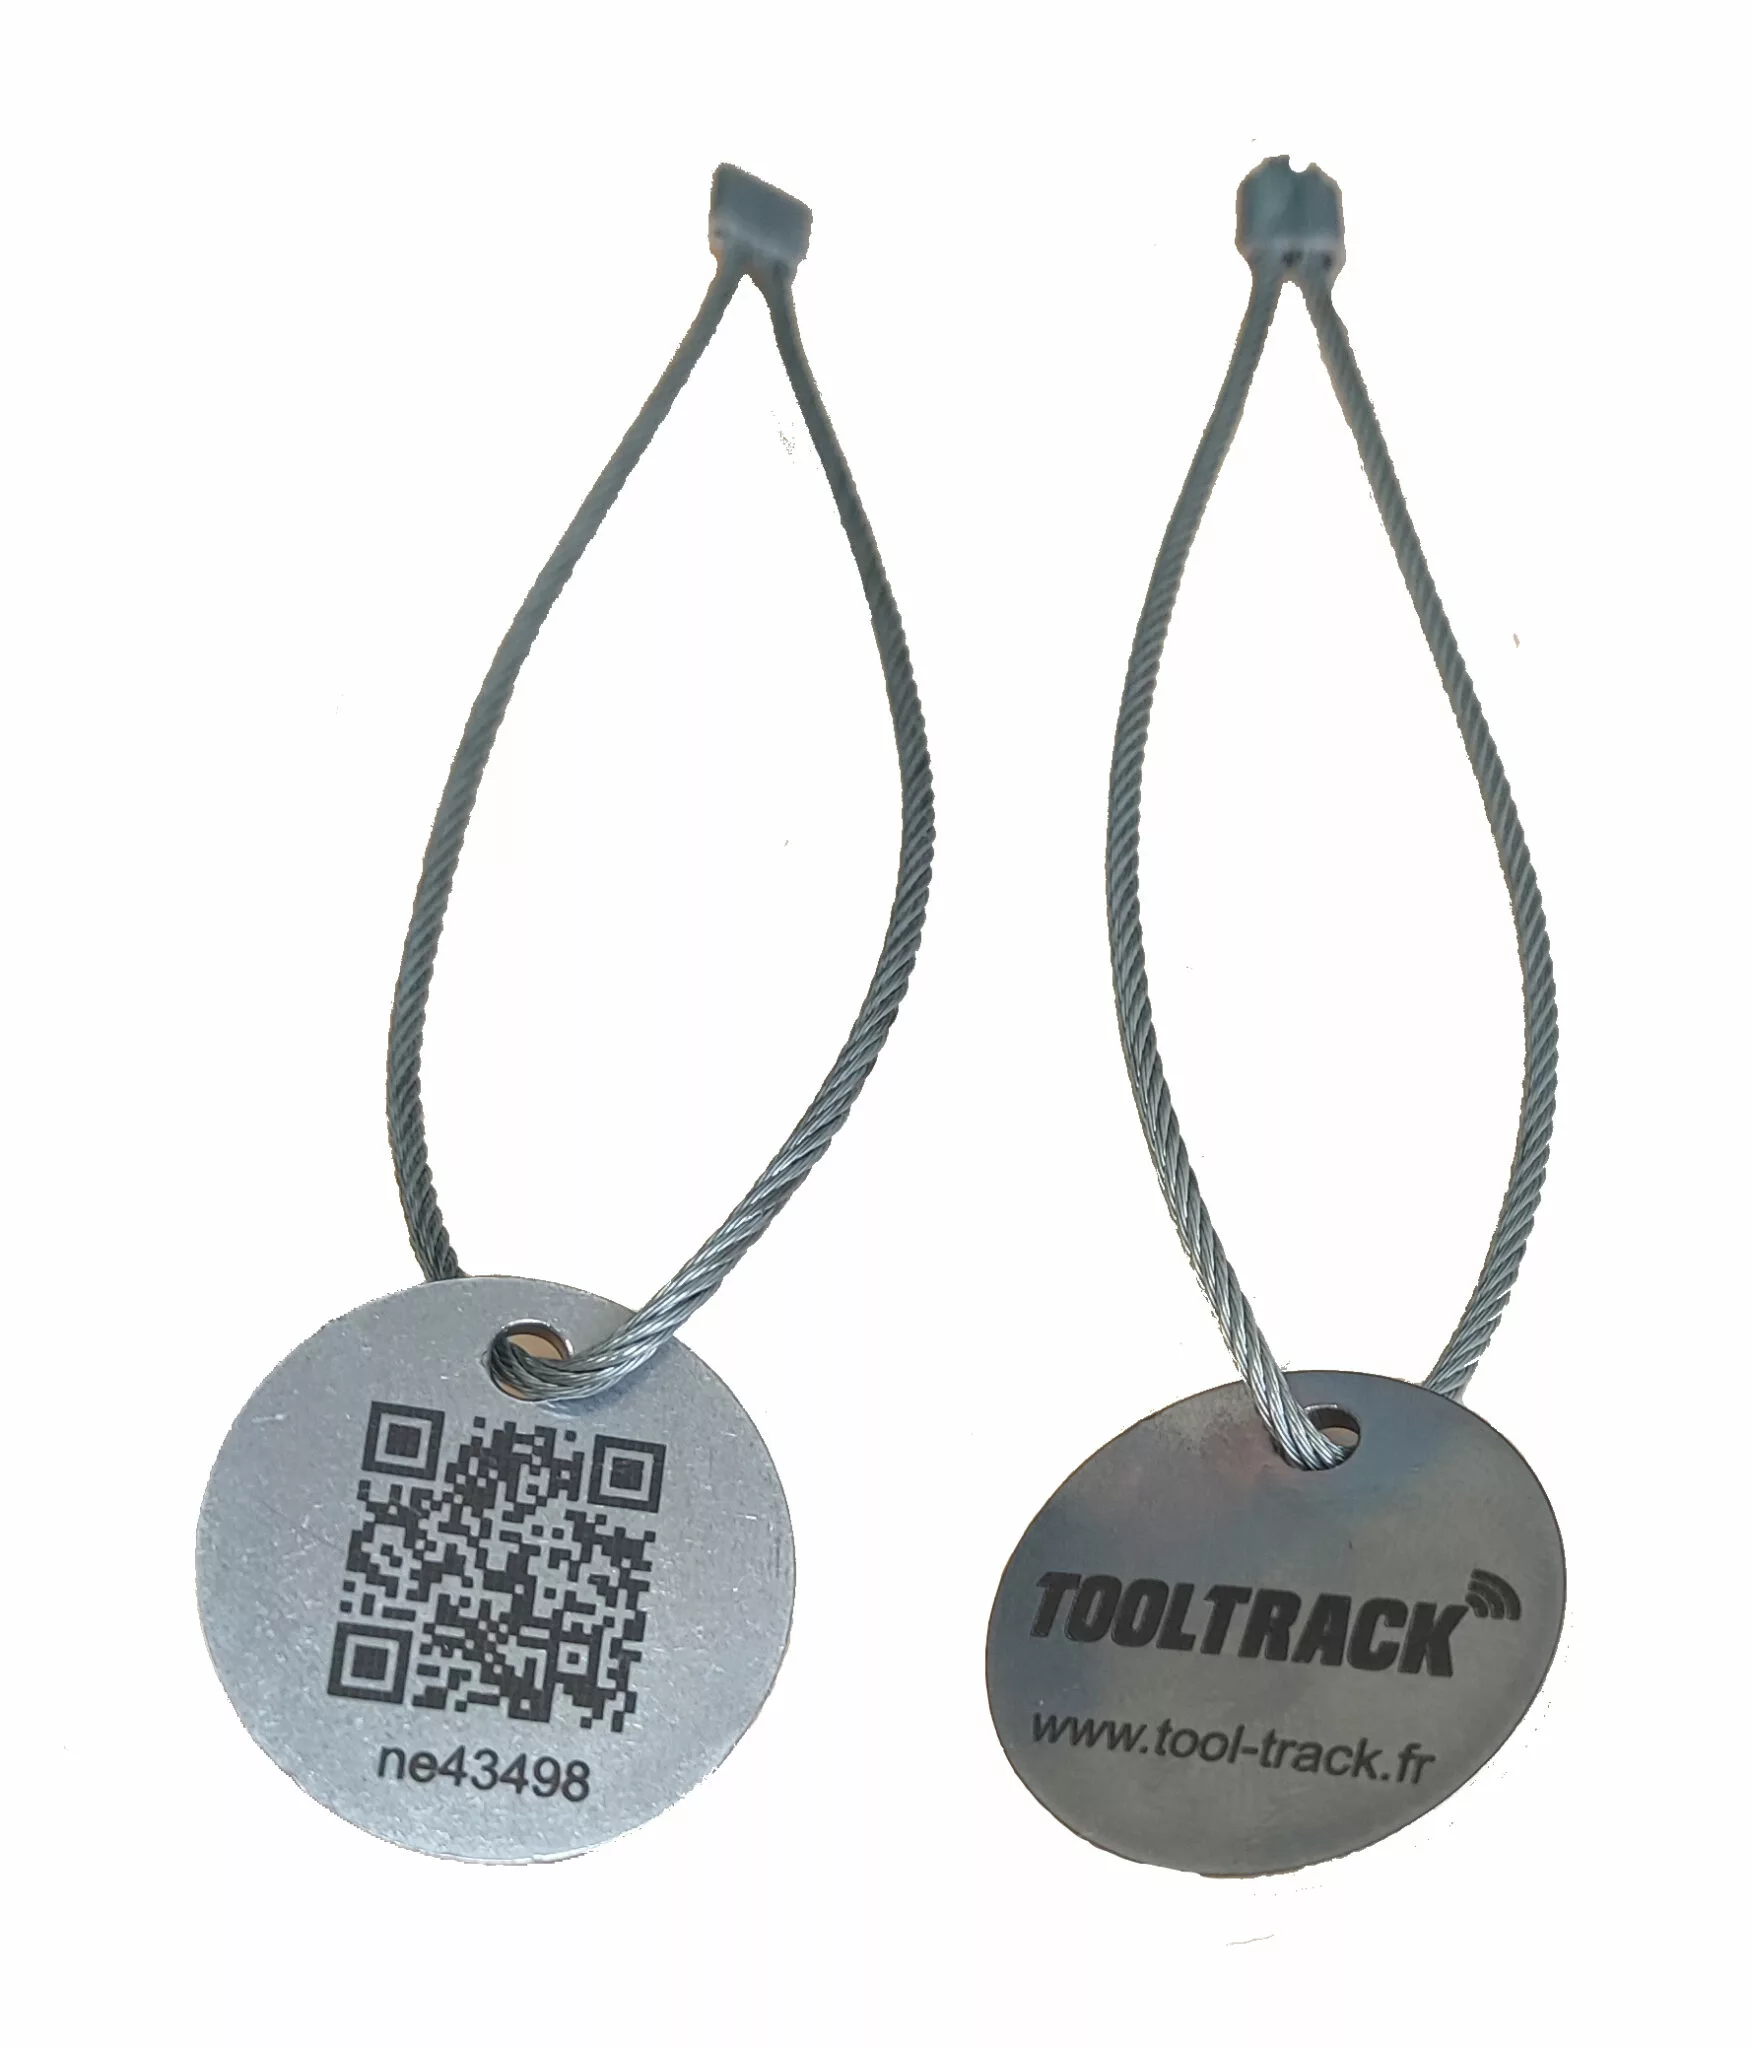 equipment identification - QRCODE medallion